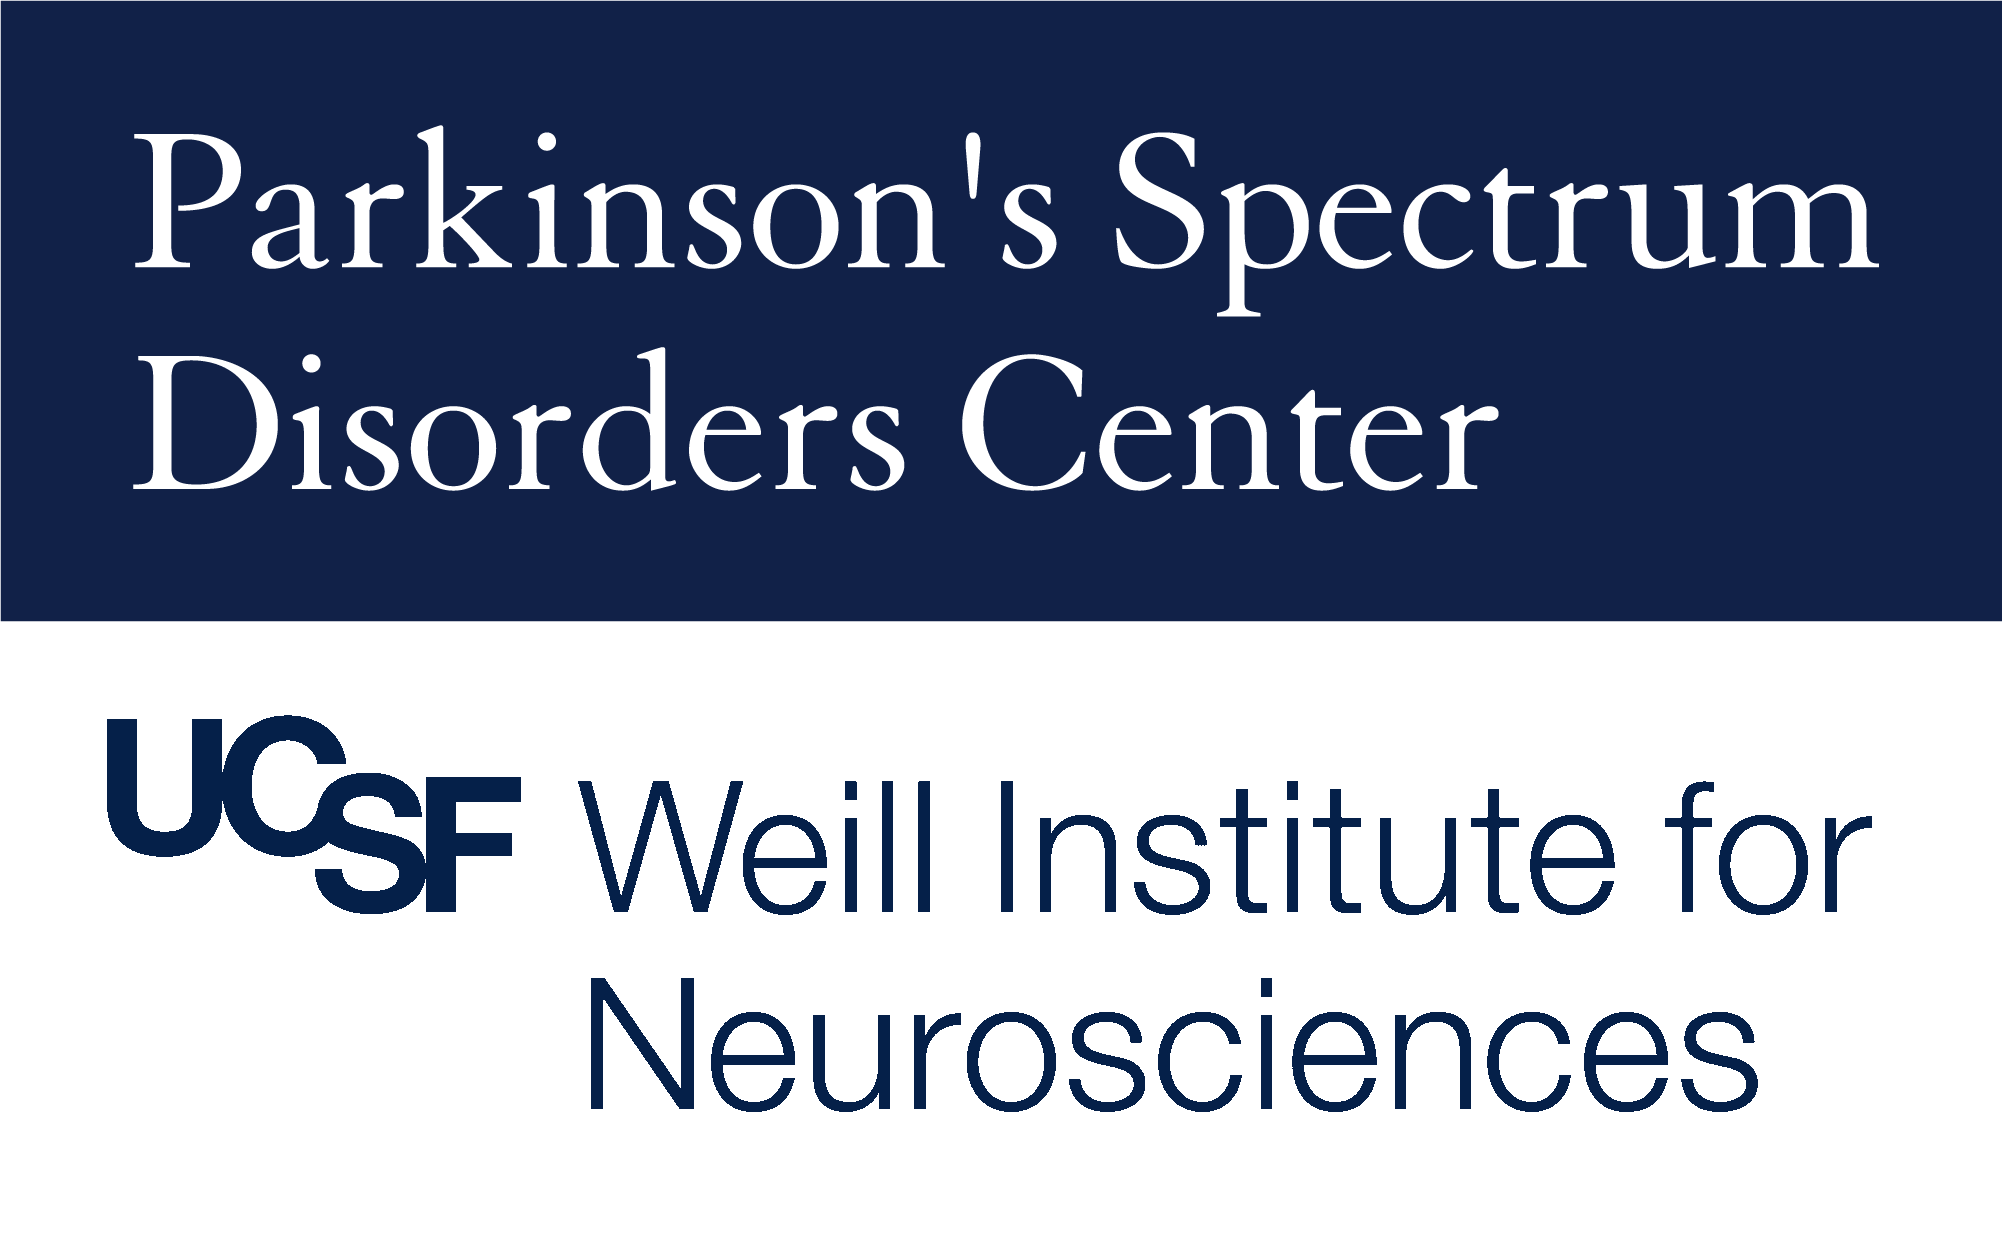 Parkinson’s Spectrum Disorders Center